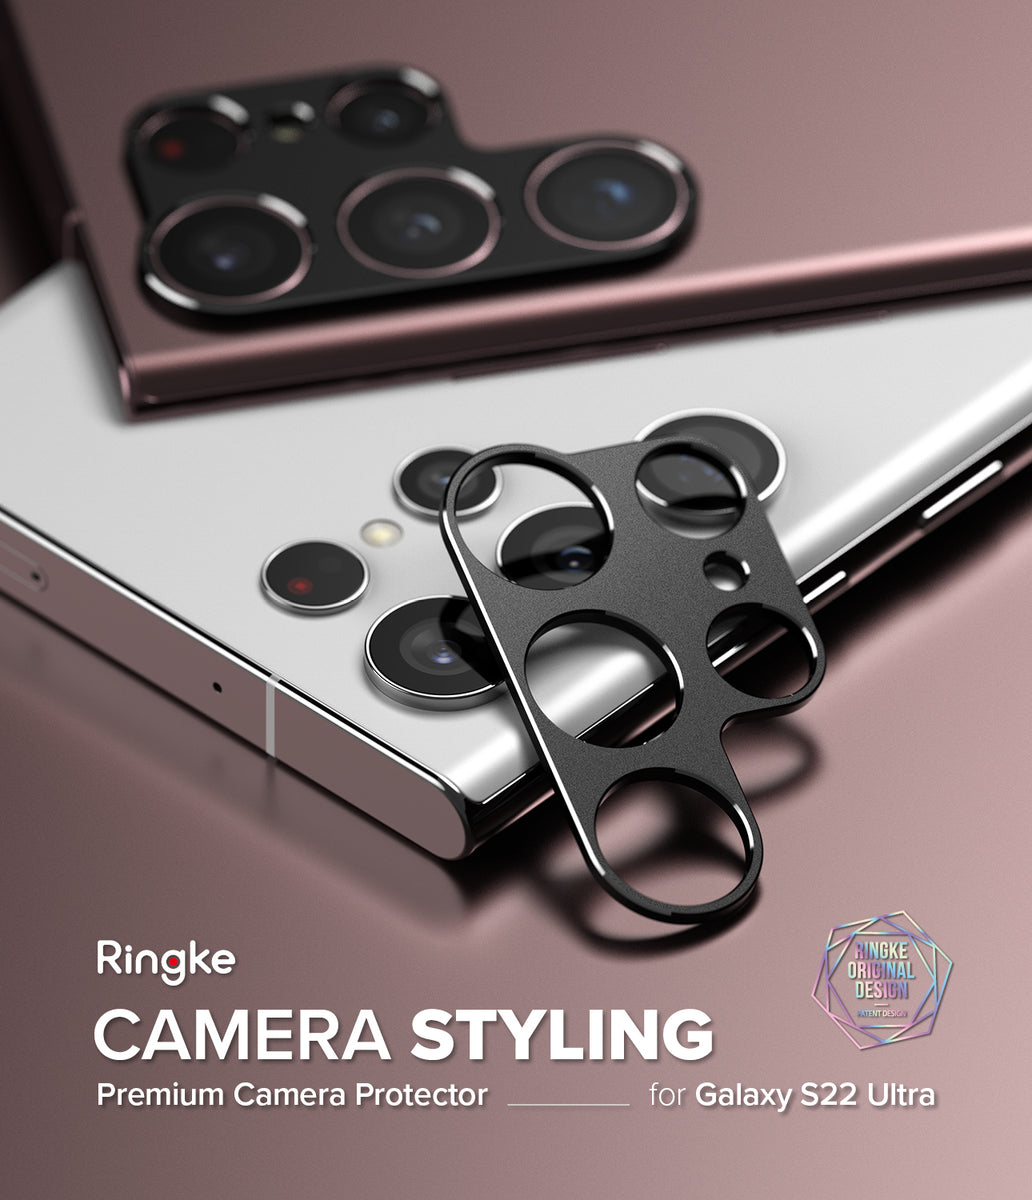 Galaxy S22 Ultra Camera Lens Protector | Ringke Camera Styling